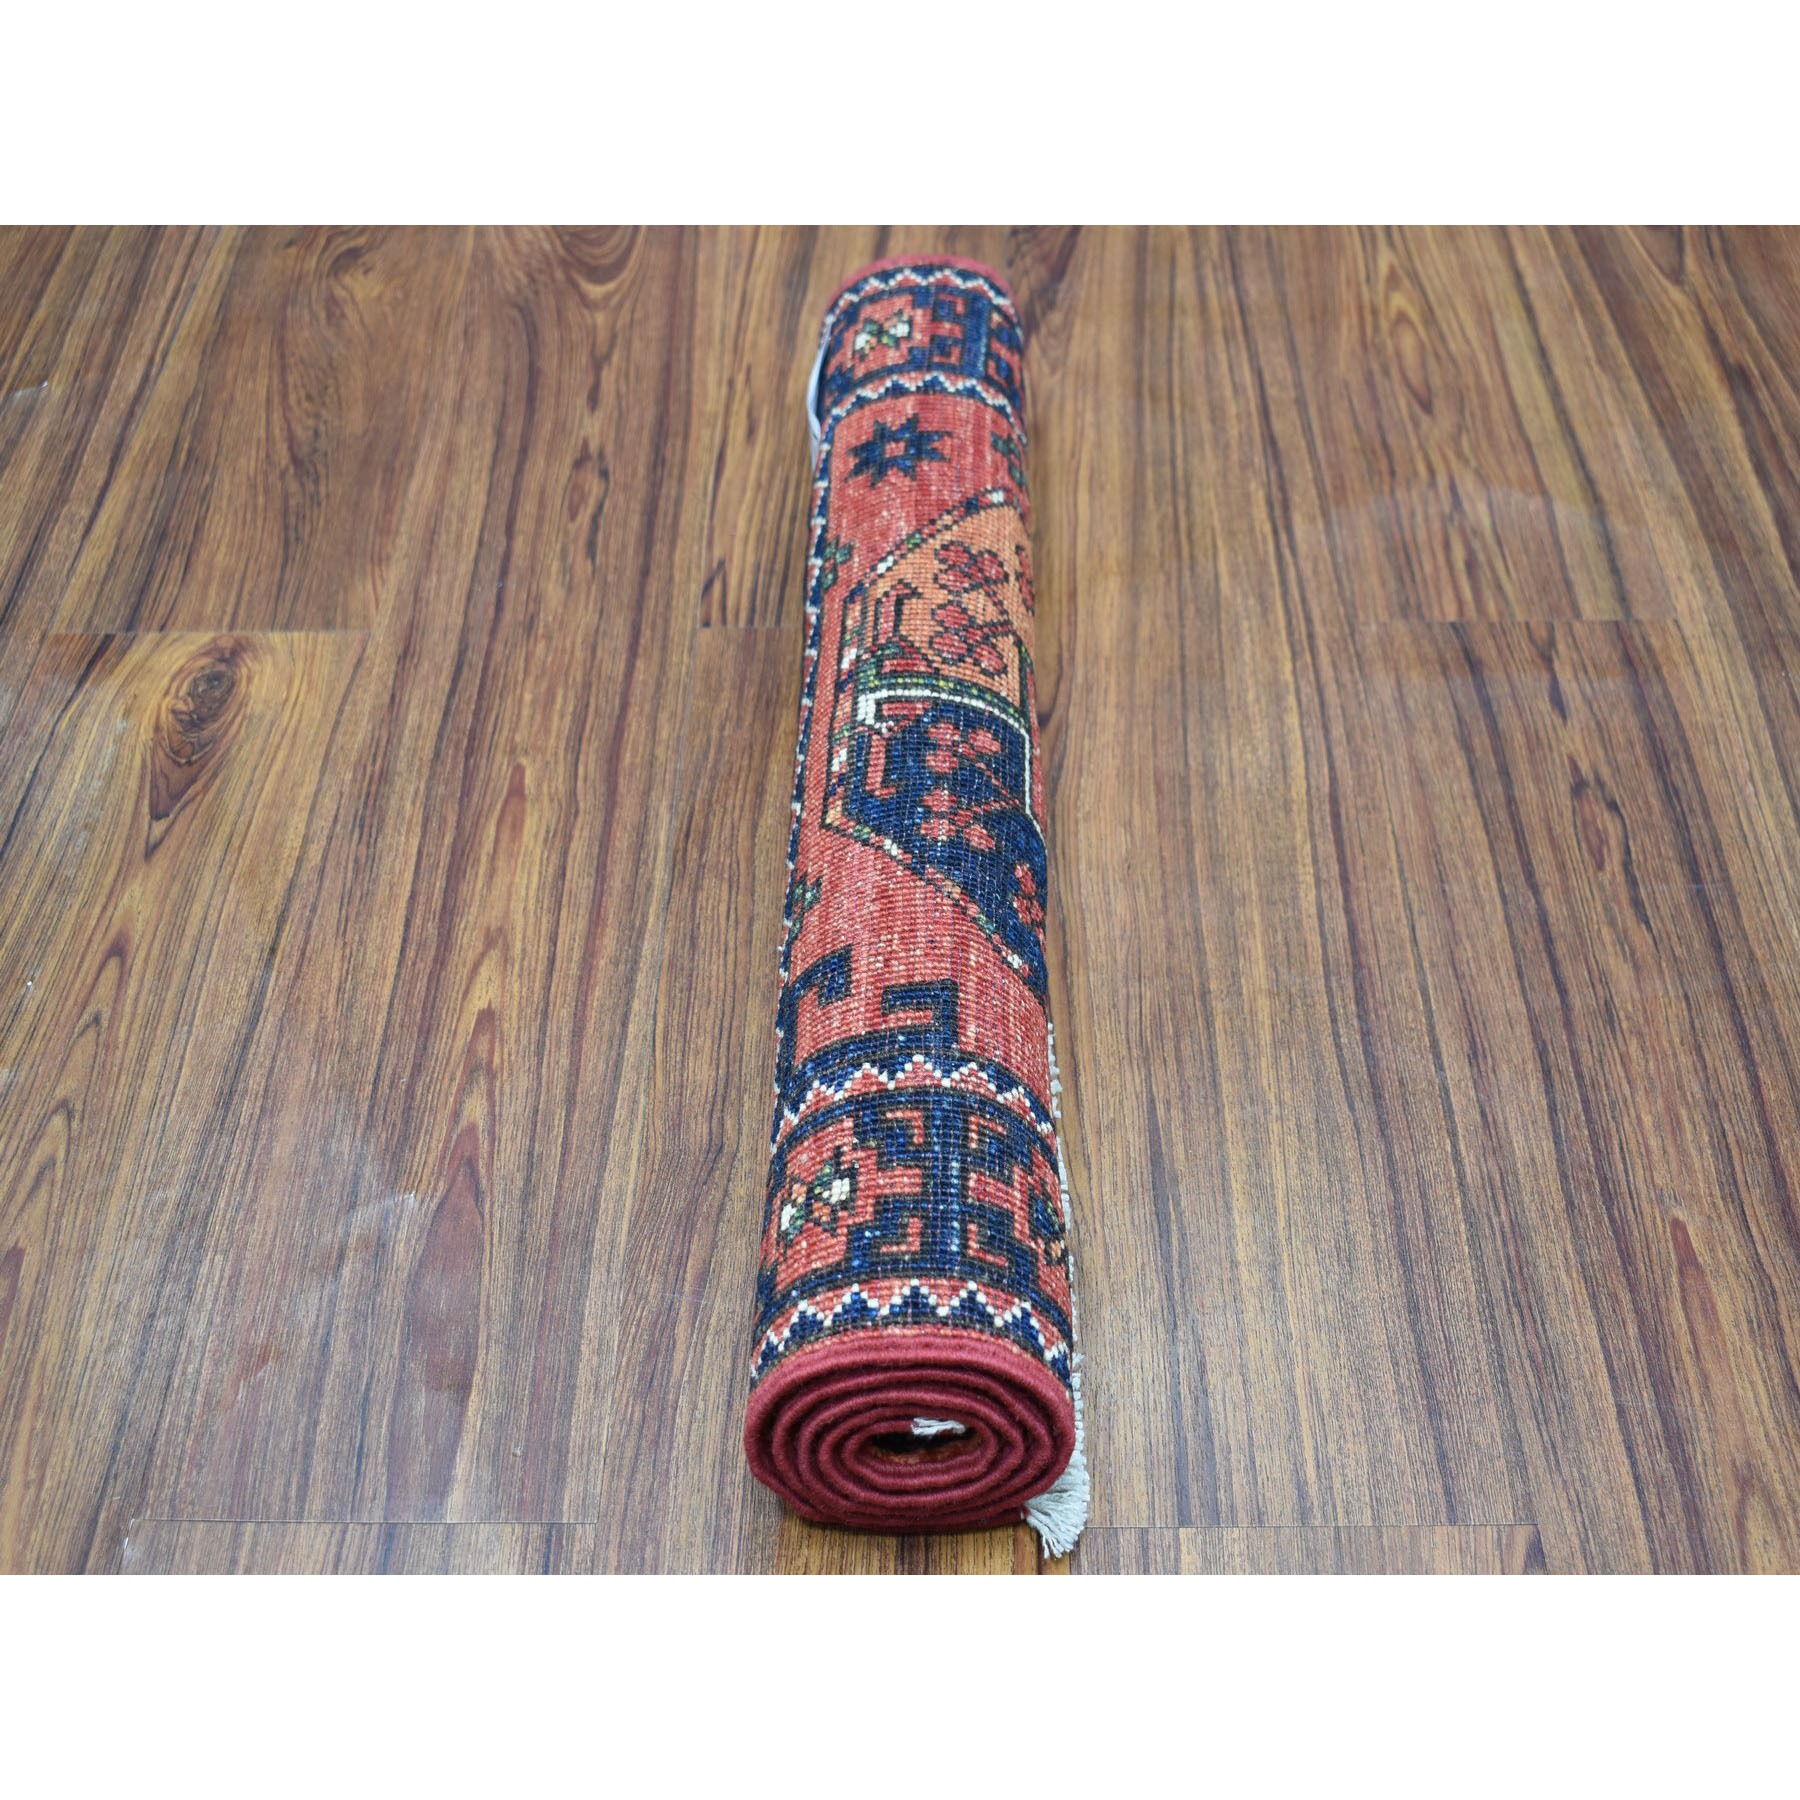 2-1 x3- Red Elephant Feet Design Afghan Ersari Pure Wool Hand Knotted Oriental Rug 